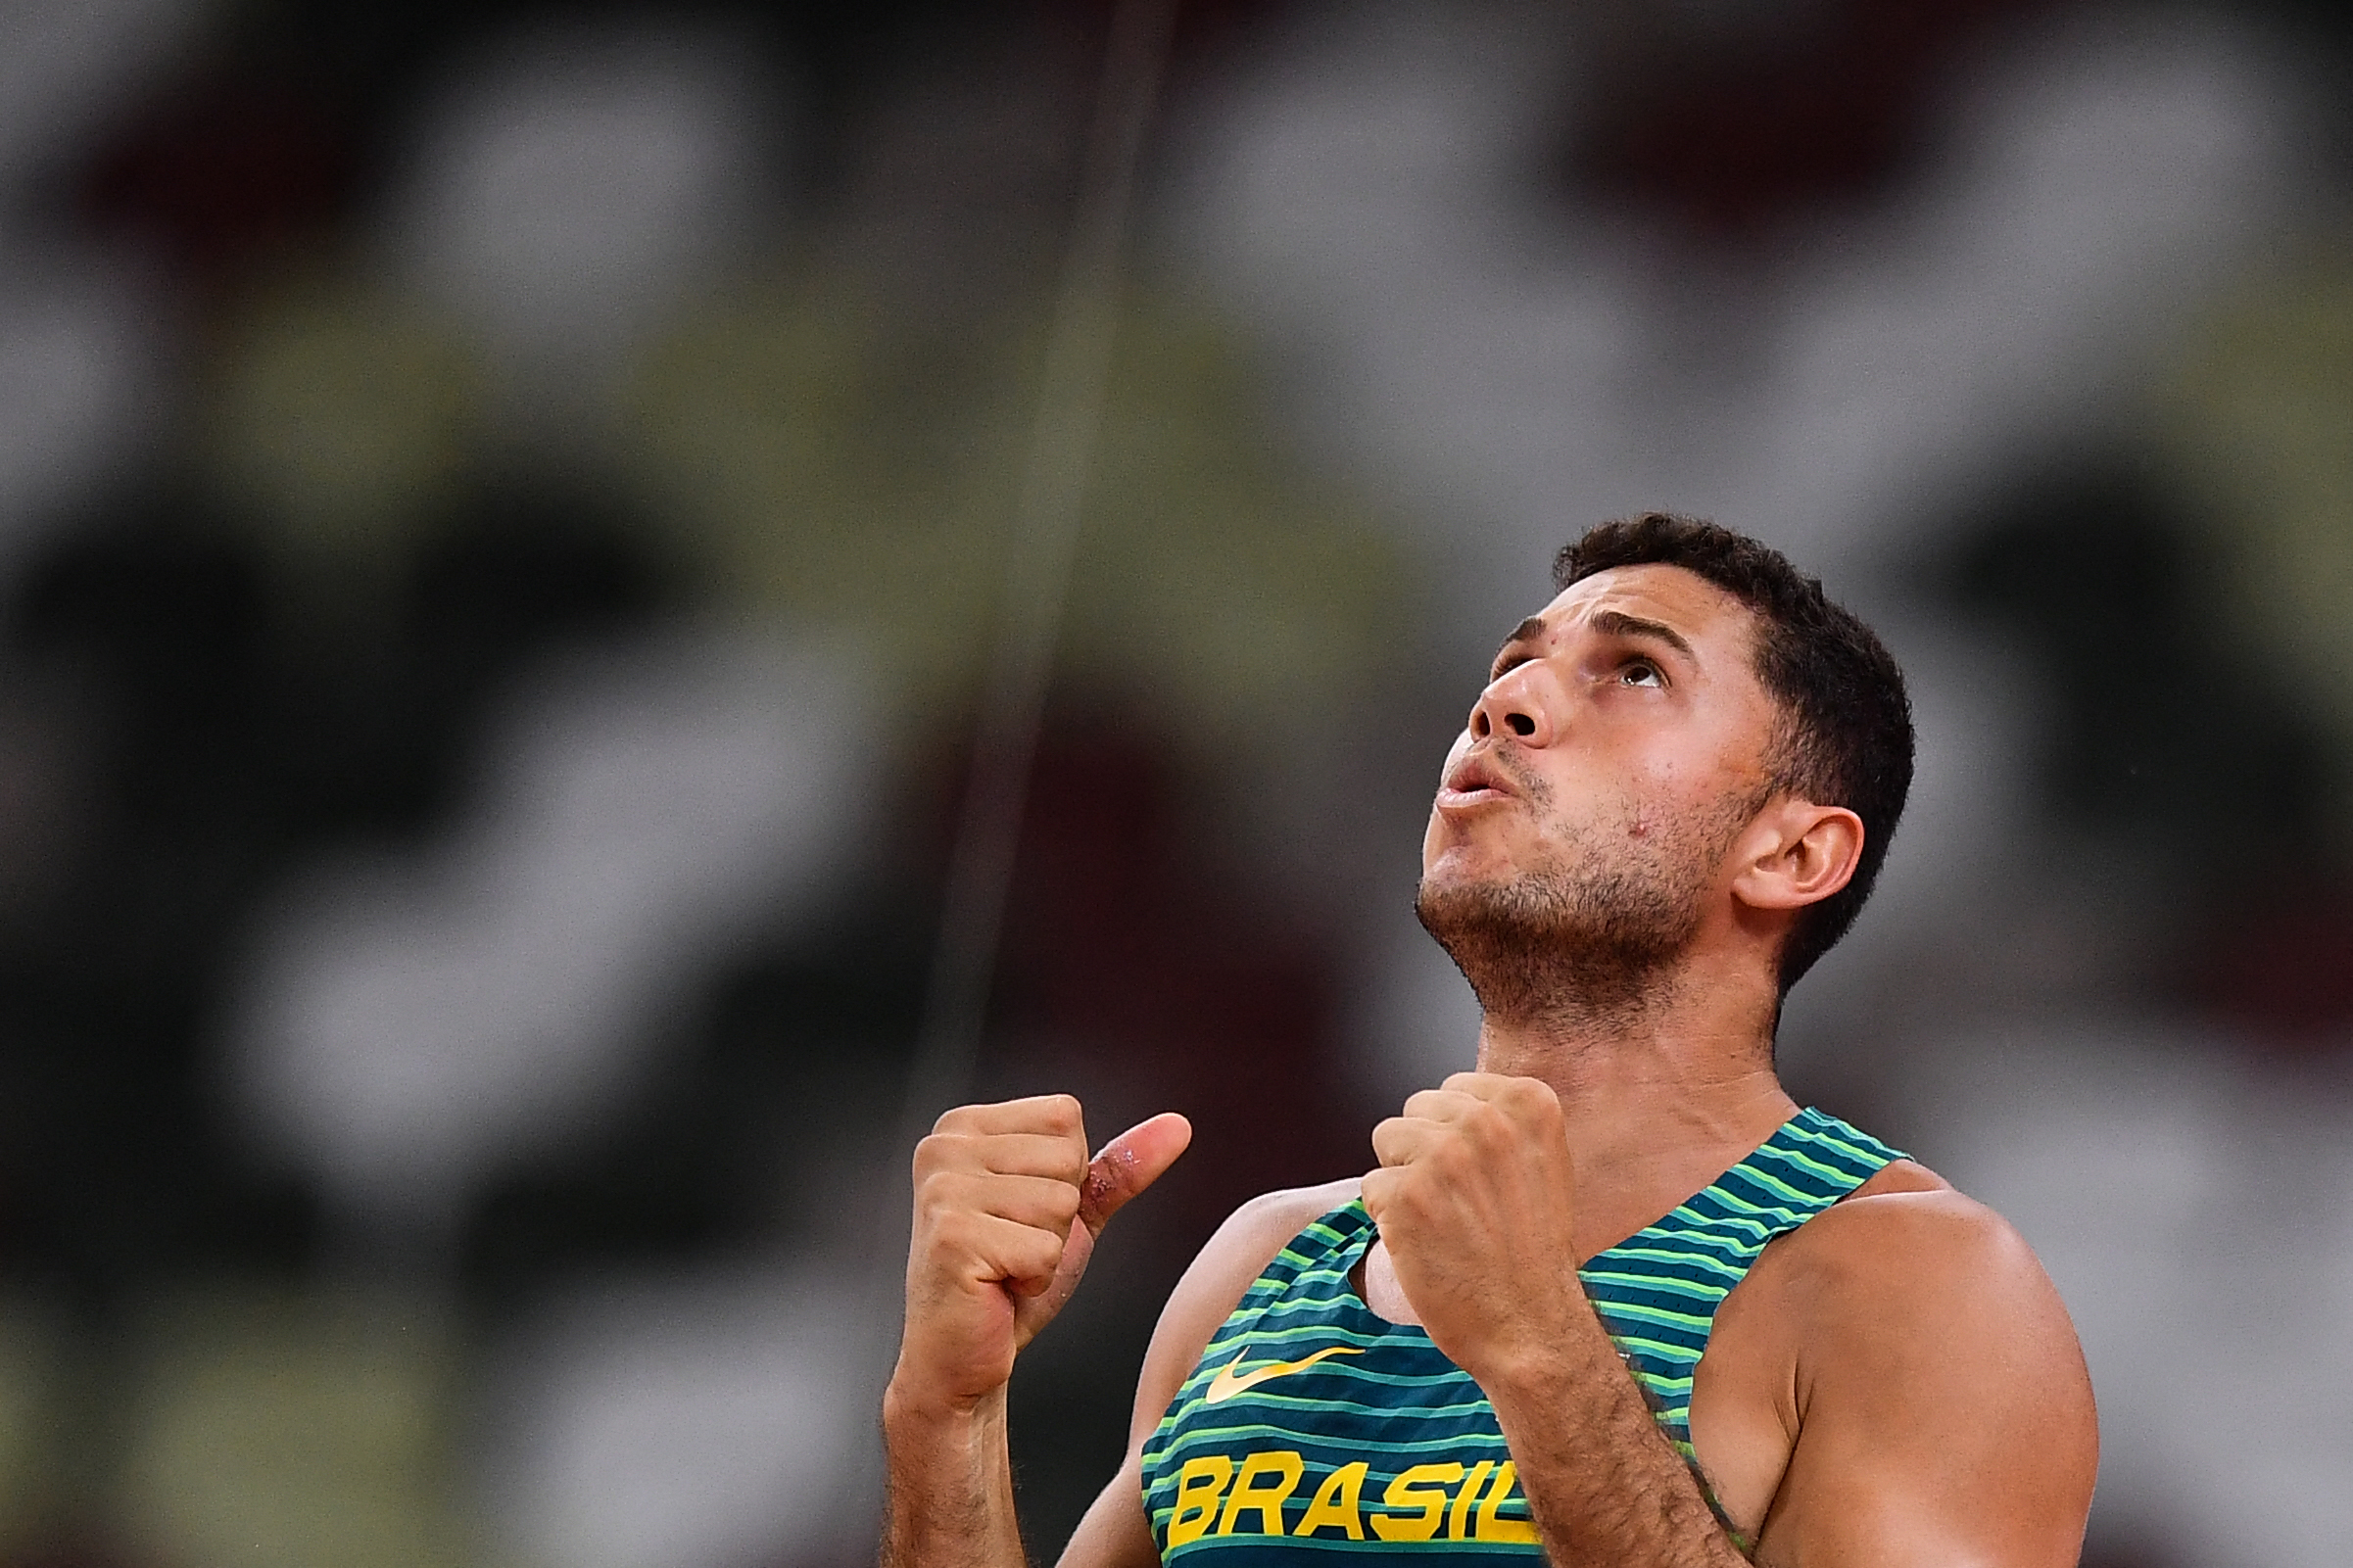 Fotos: Thiago Braz garante a medalha de bronze